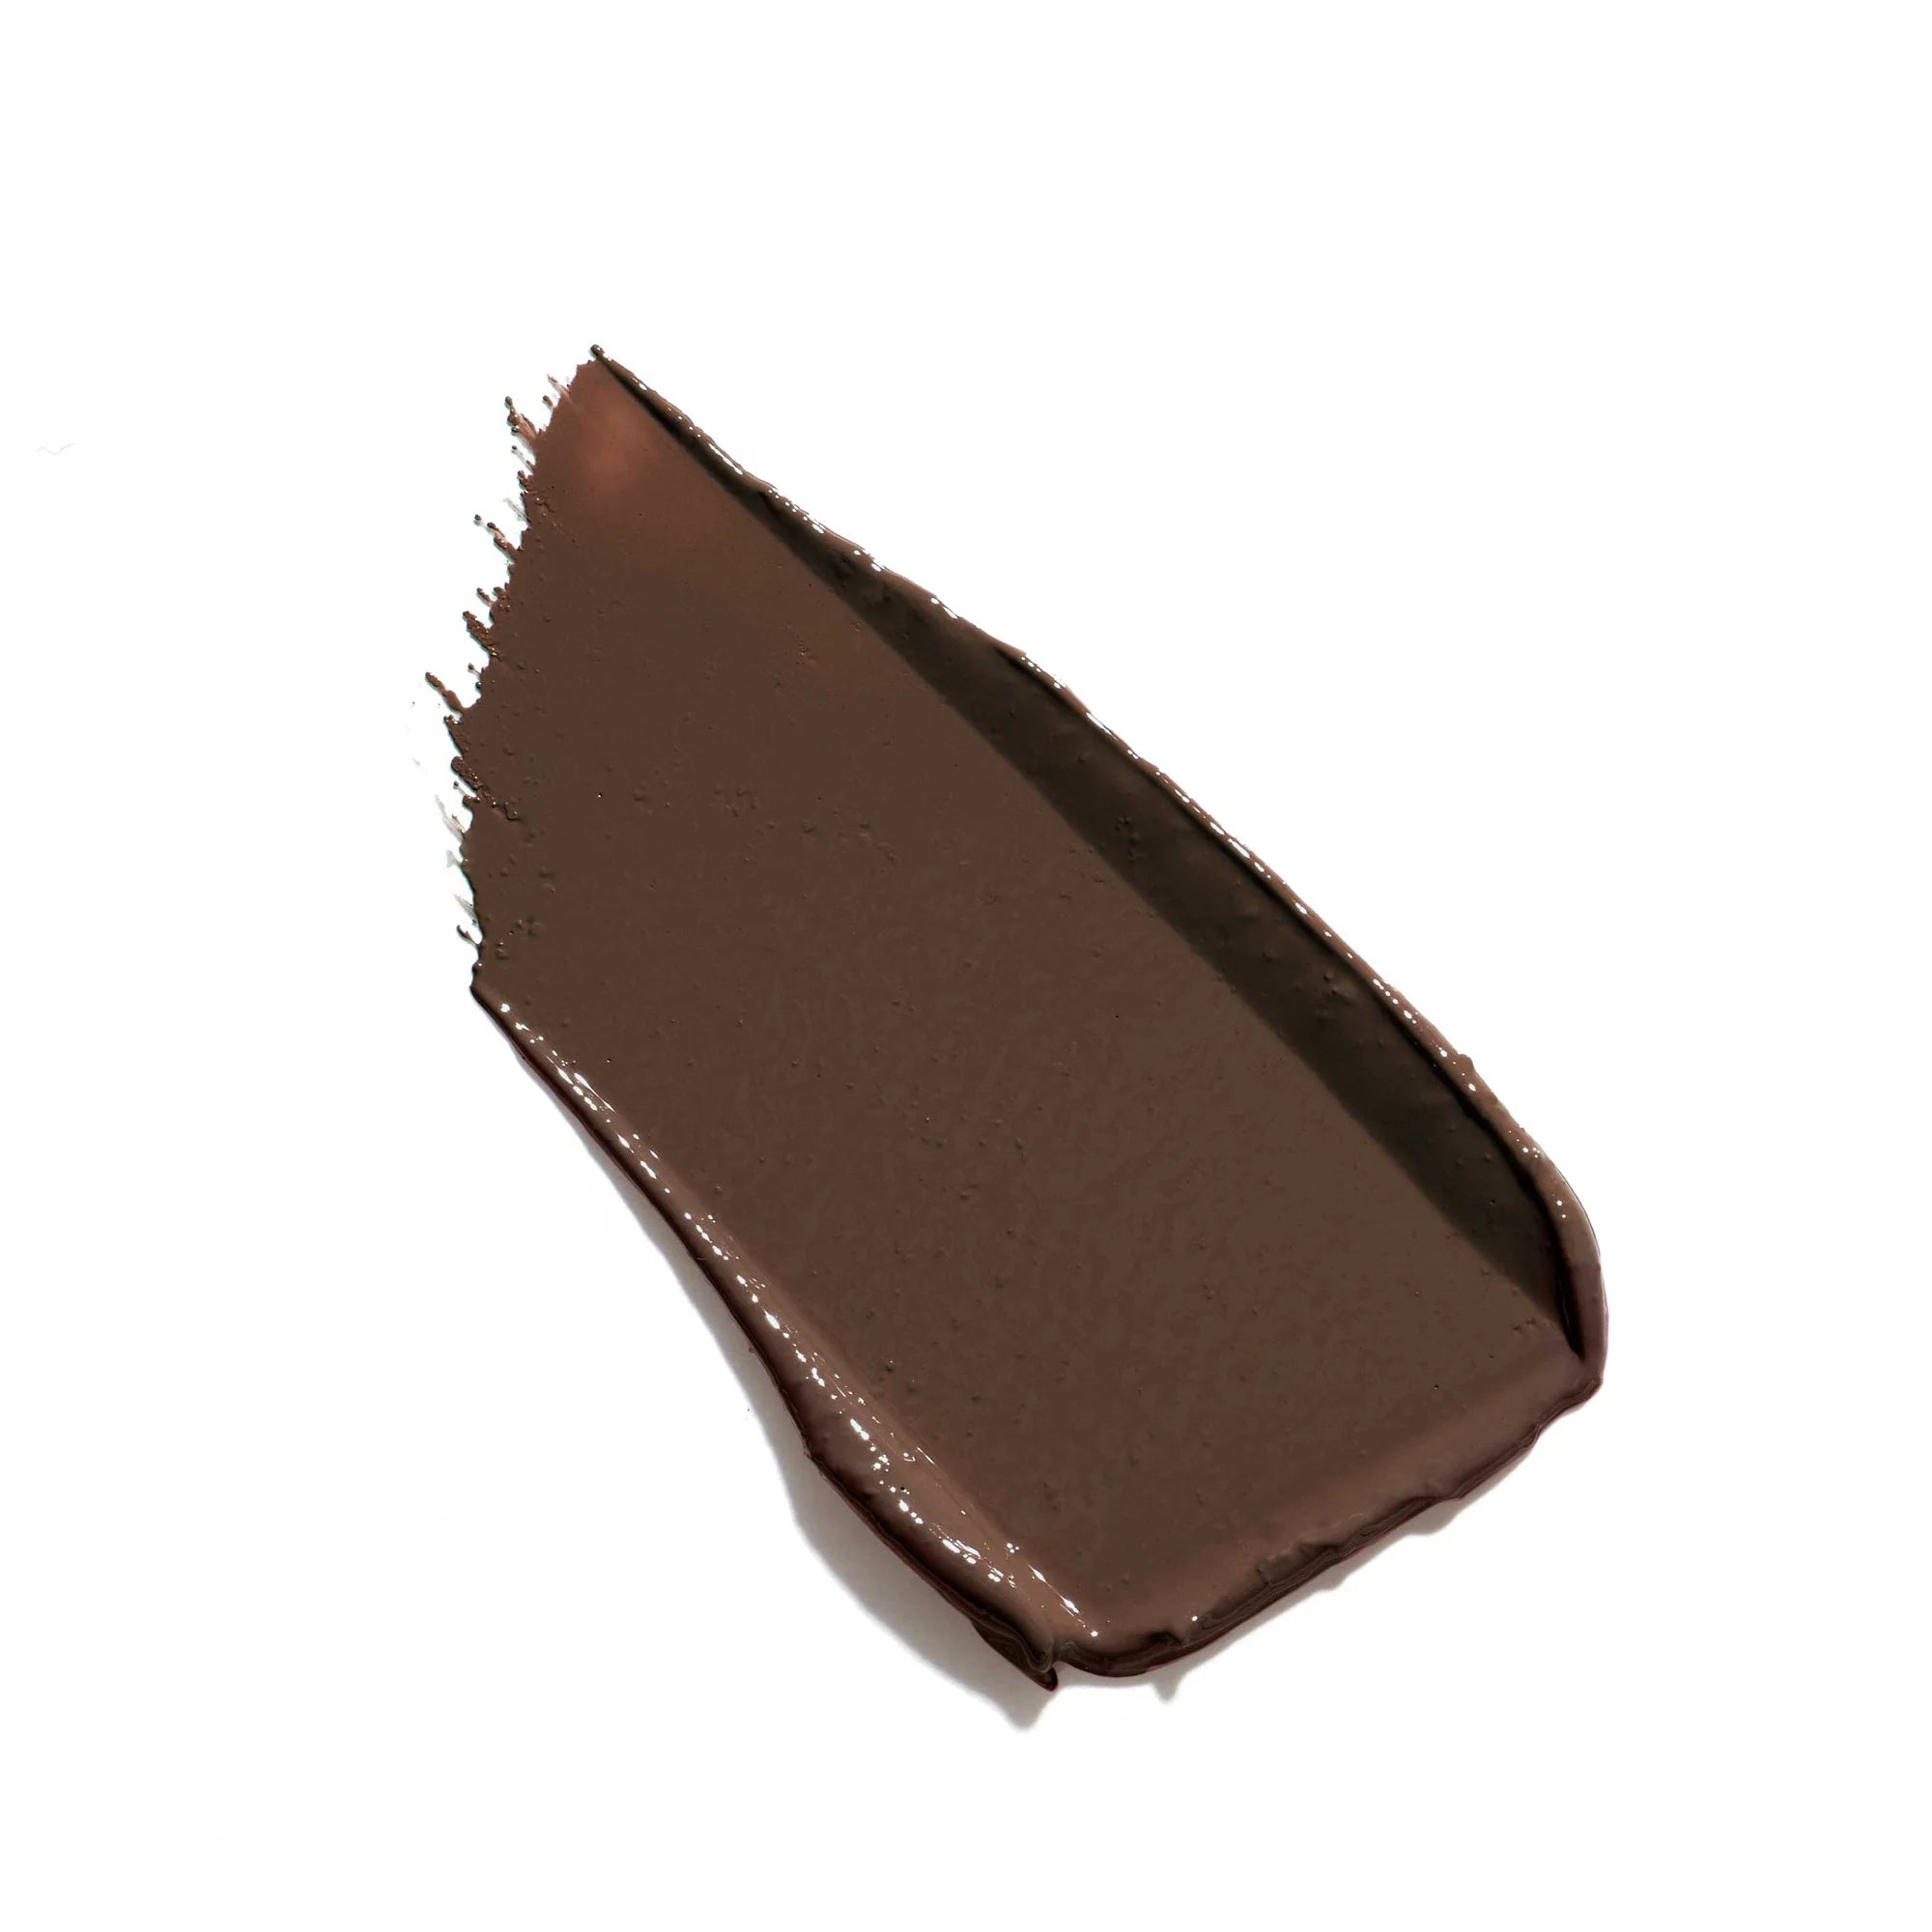 Jane Iredale's ColorLuxe Hydrating Cream Lipstick - swatch and color Espresso - warm medium-dark brown